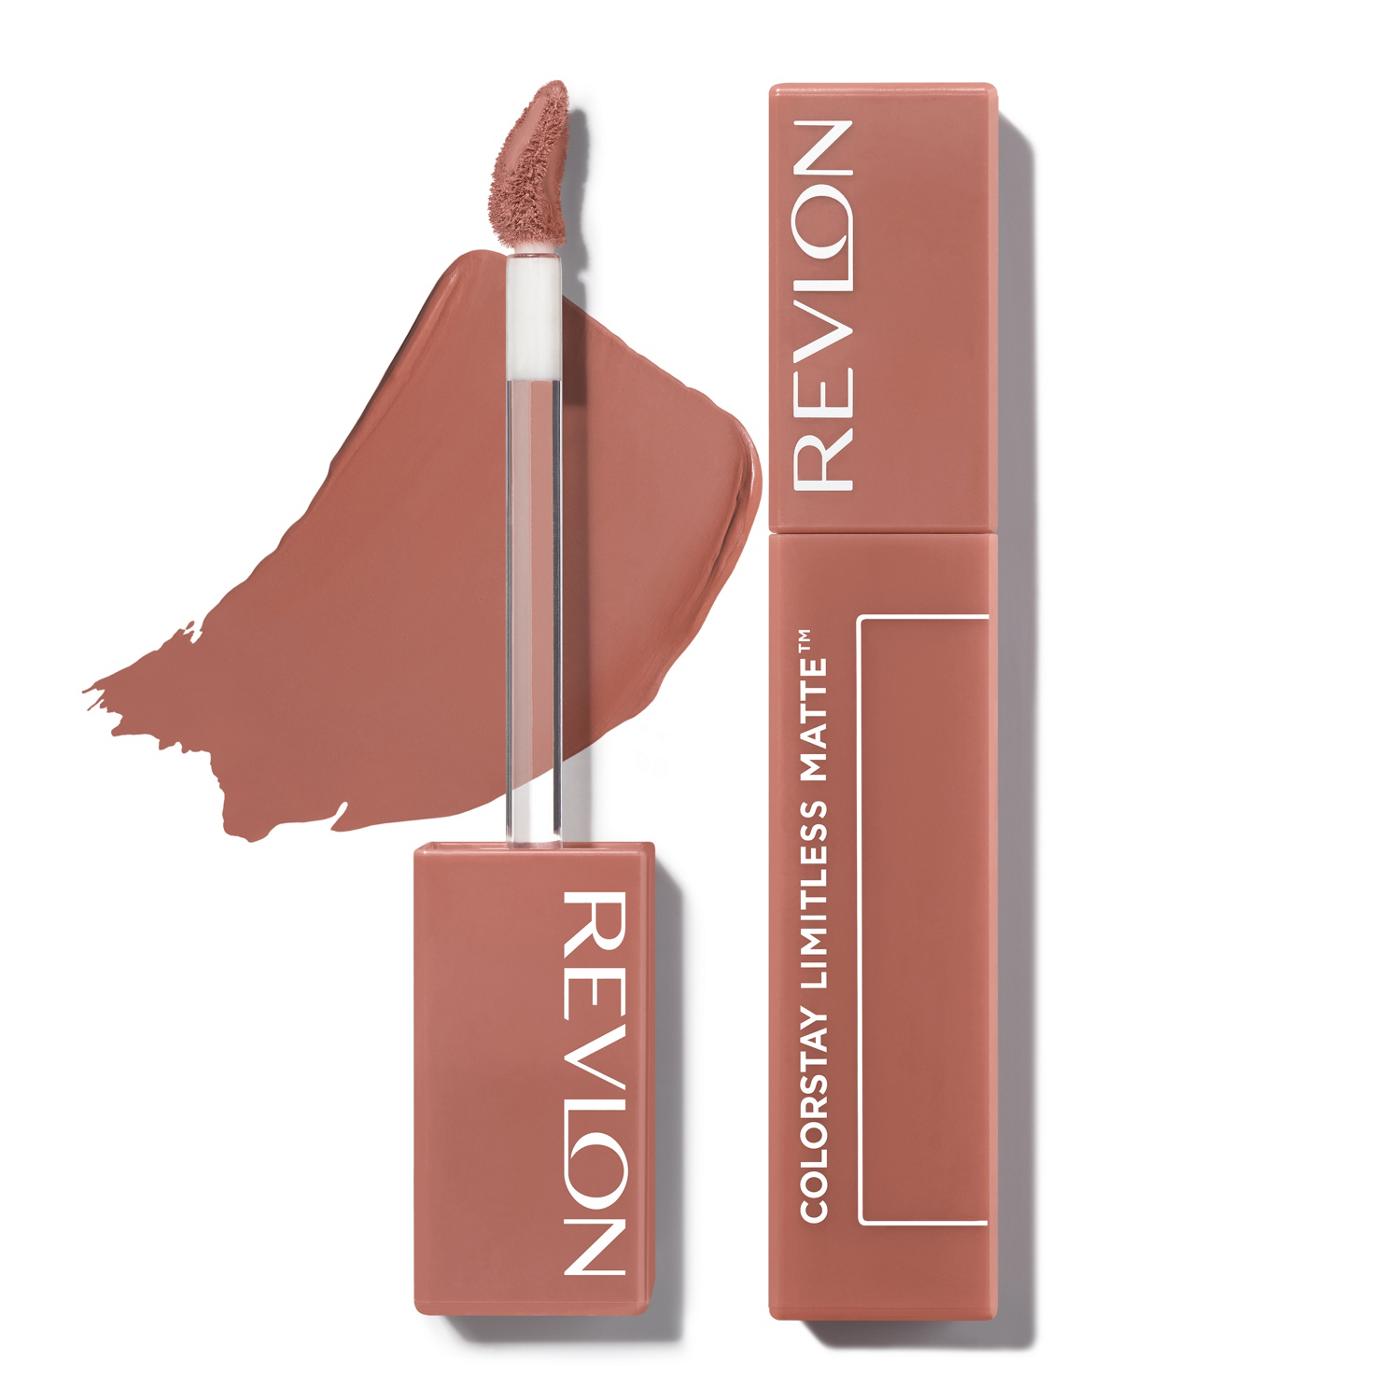 Revlon Colorstay Limitless Matte Liquid Lipstick - Beauty; image 1 of 6